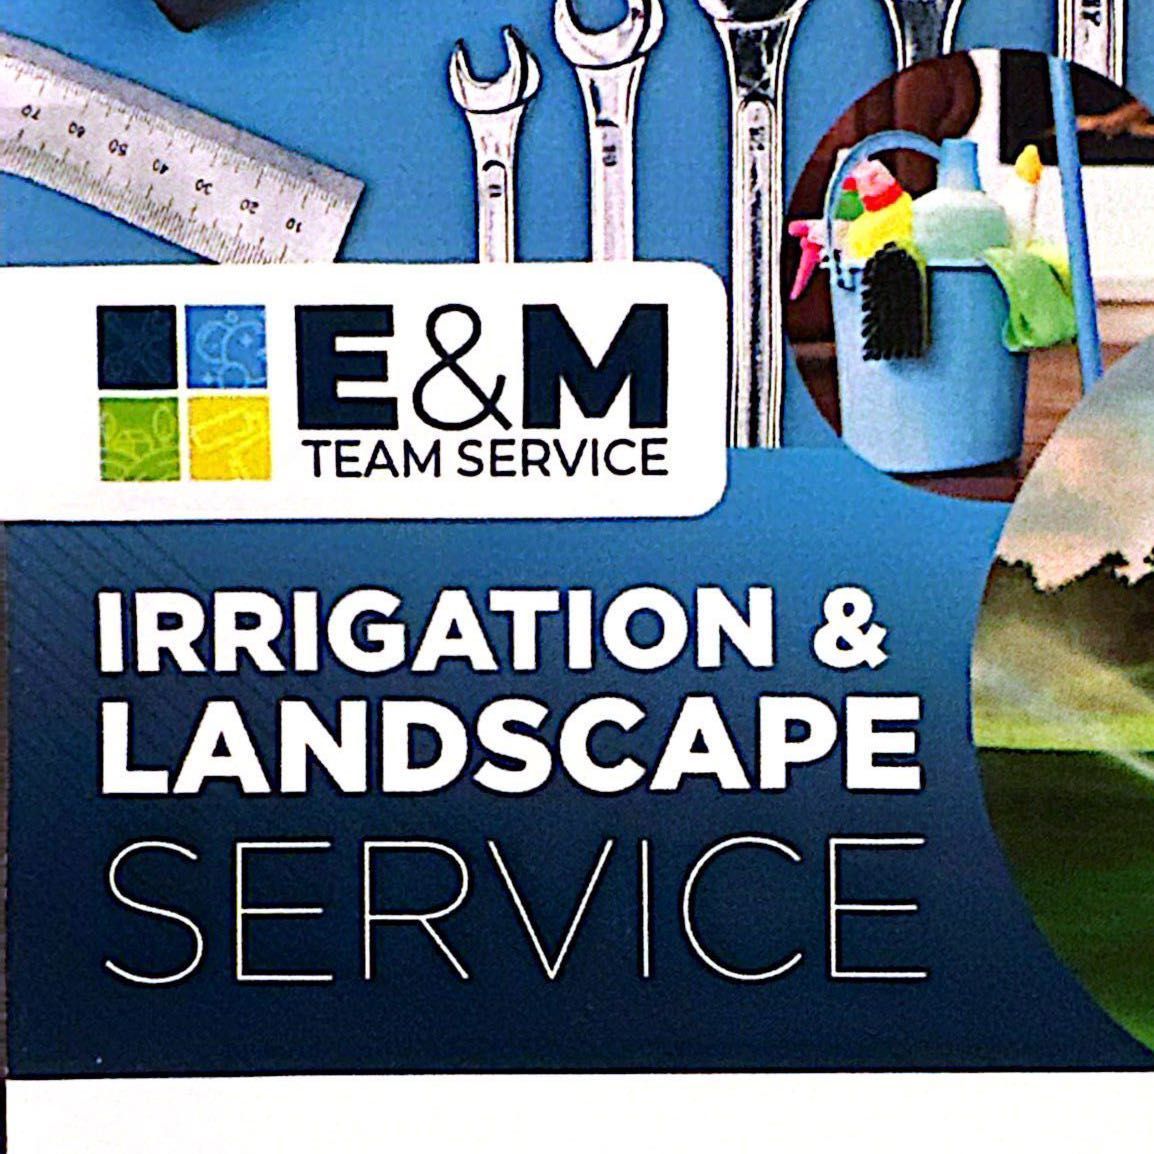 E&M team services, 6494 Winding Path Way, St Cloud, 34771